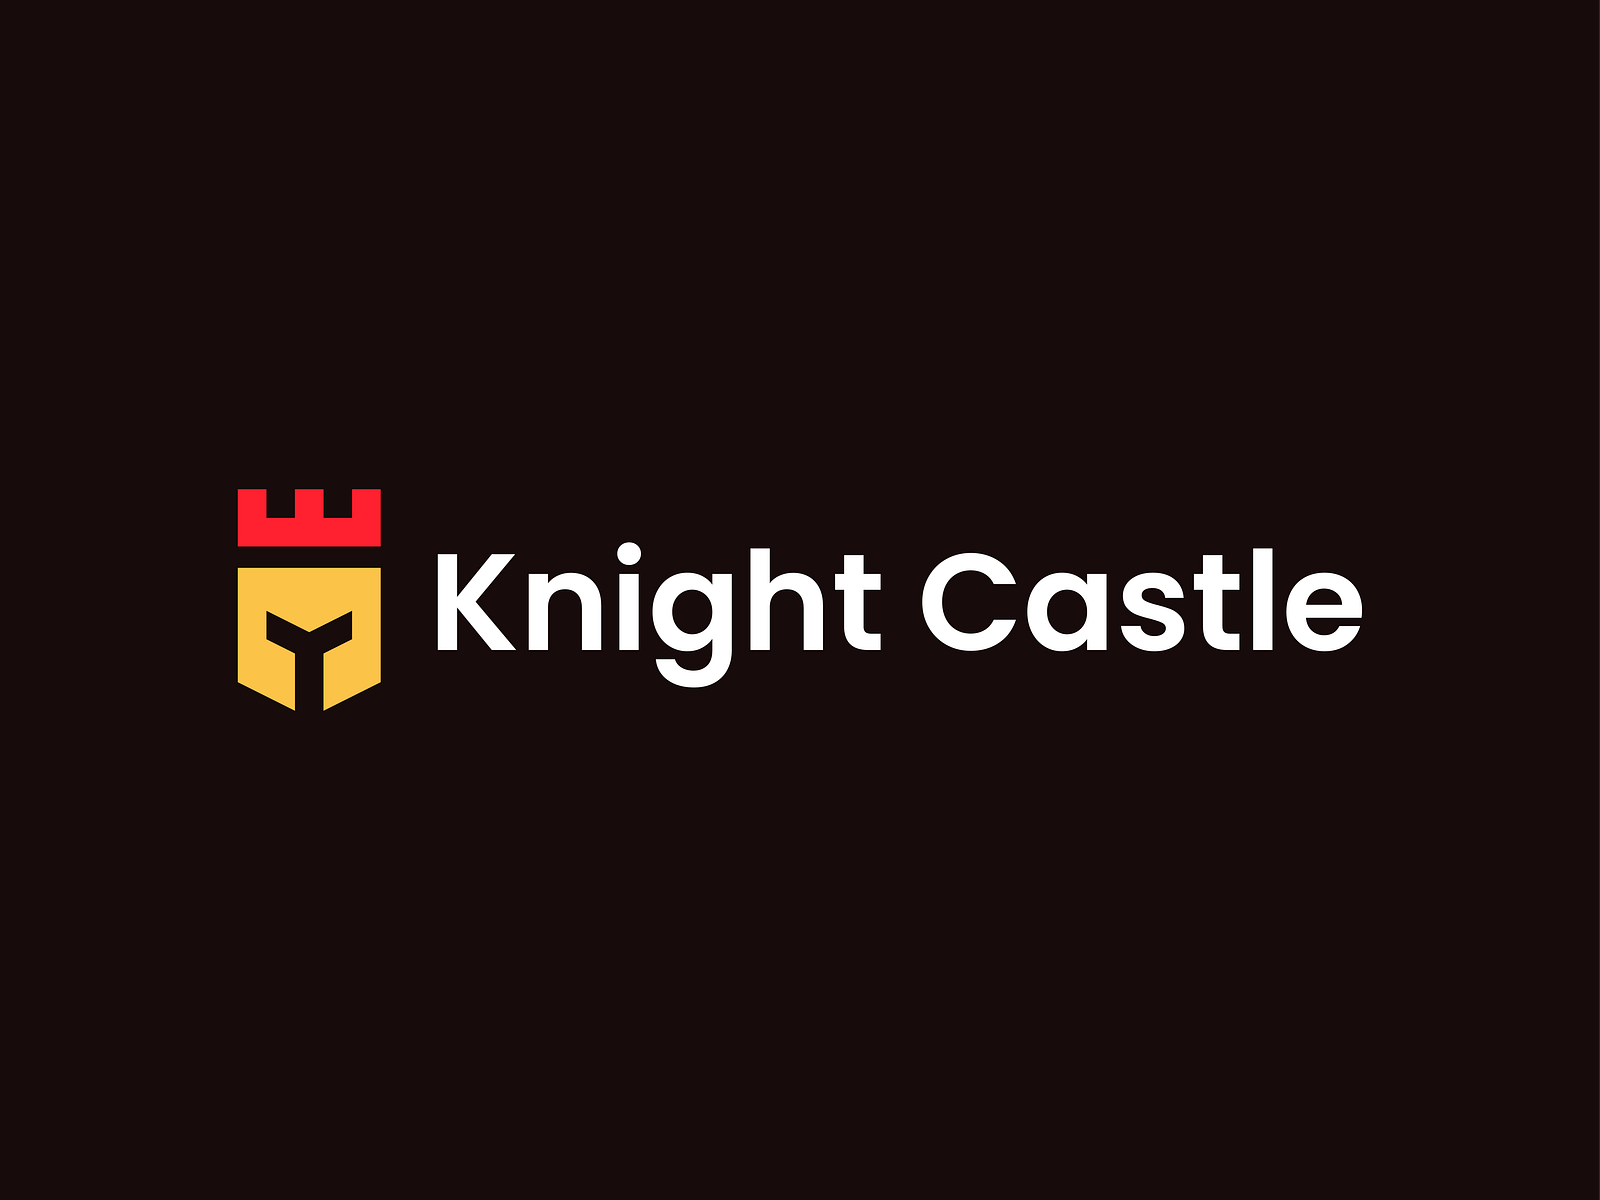 Knight Castle Logo Design by Nauval Pradipta on Dribbble